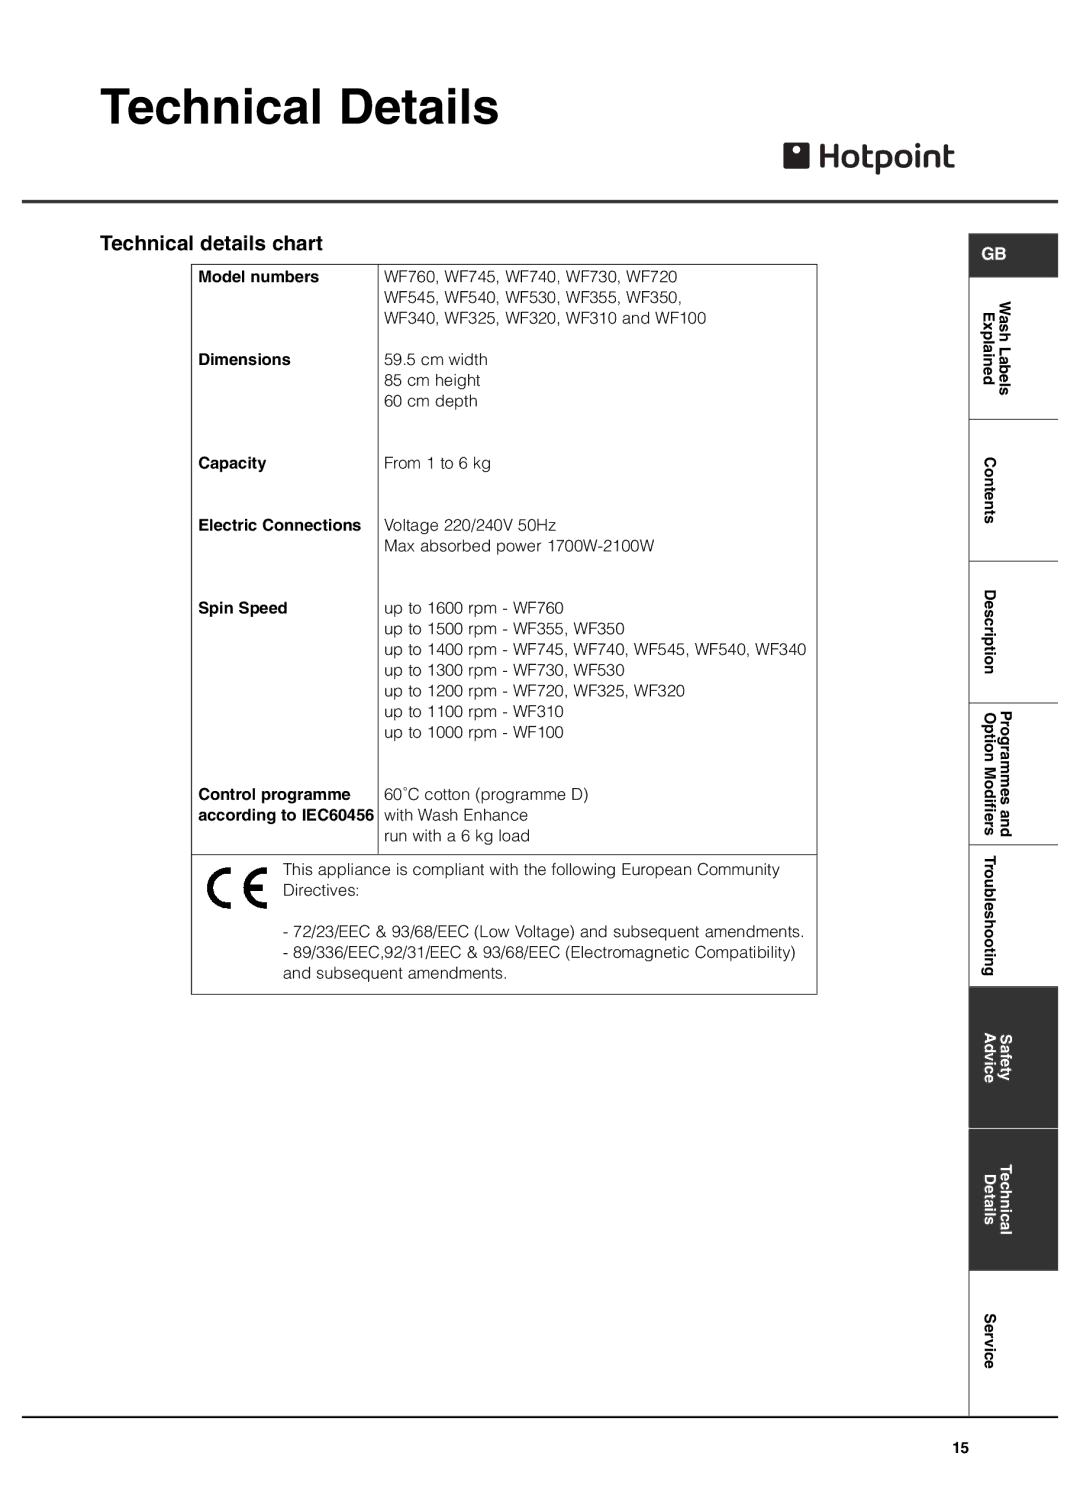 Hotpoint Aquarius+ manual Technical Details, Technical details chart 